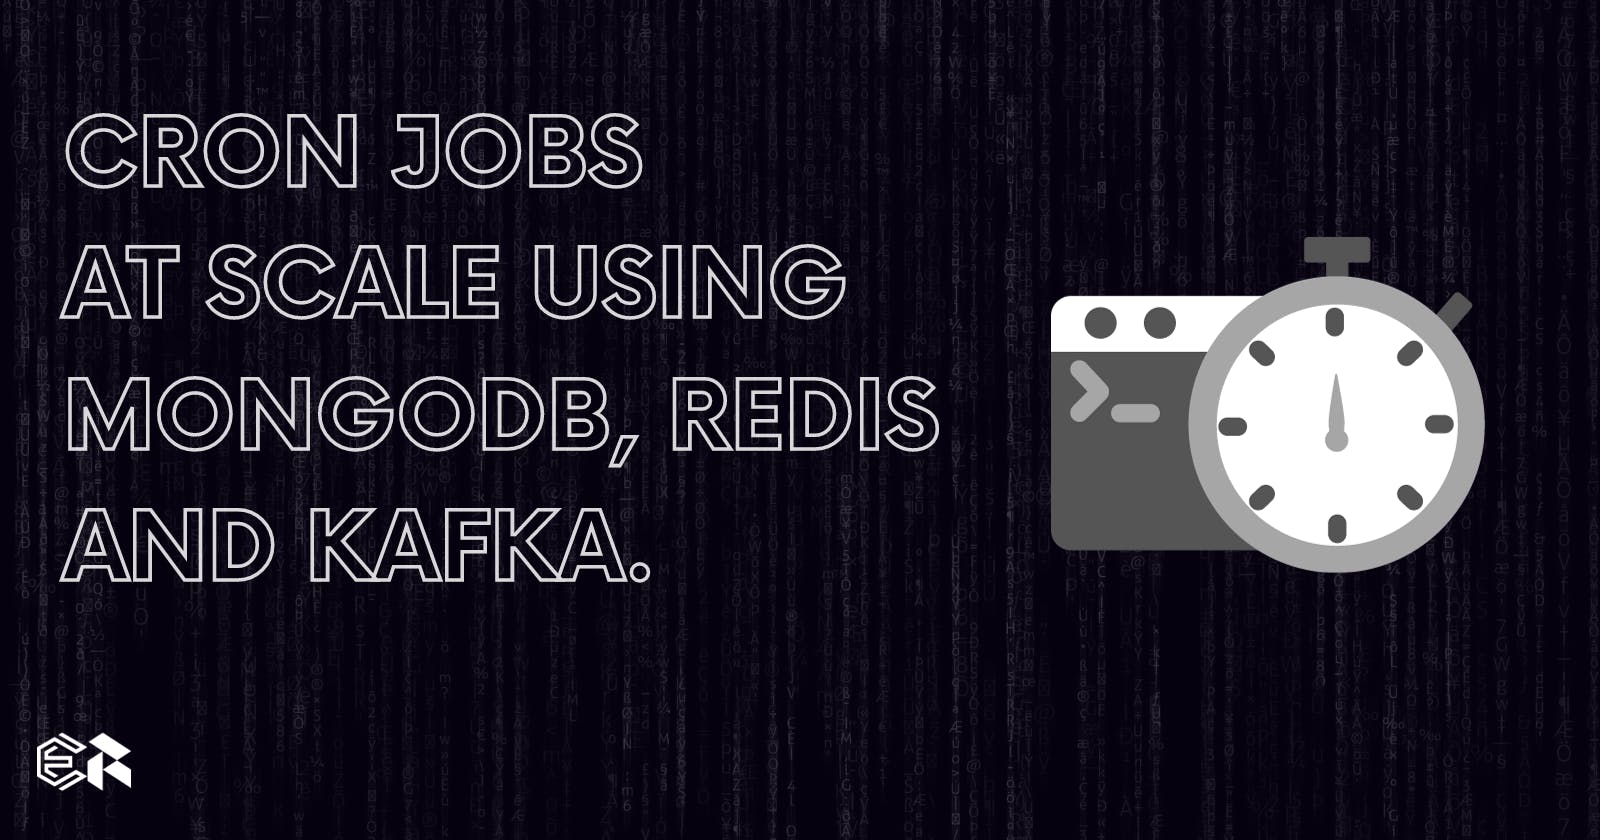 Cron Jobs at Scale using MongoDB, Redis and Kafka.